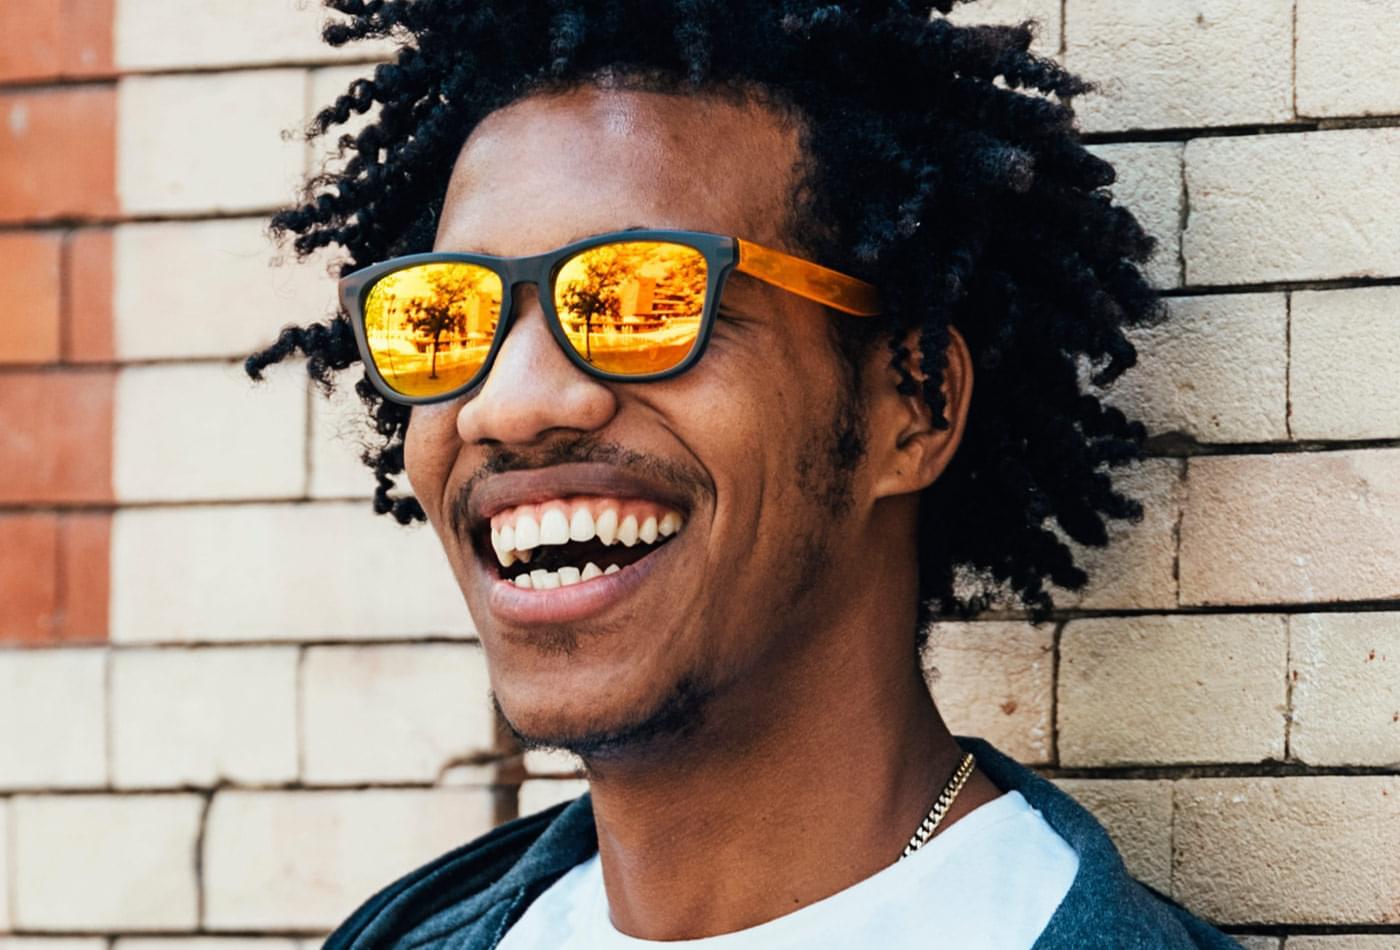 Browse flash mirrored sunglasses for men & women in 6 unique lens colors.